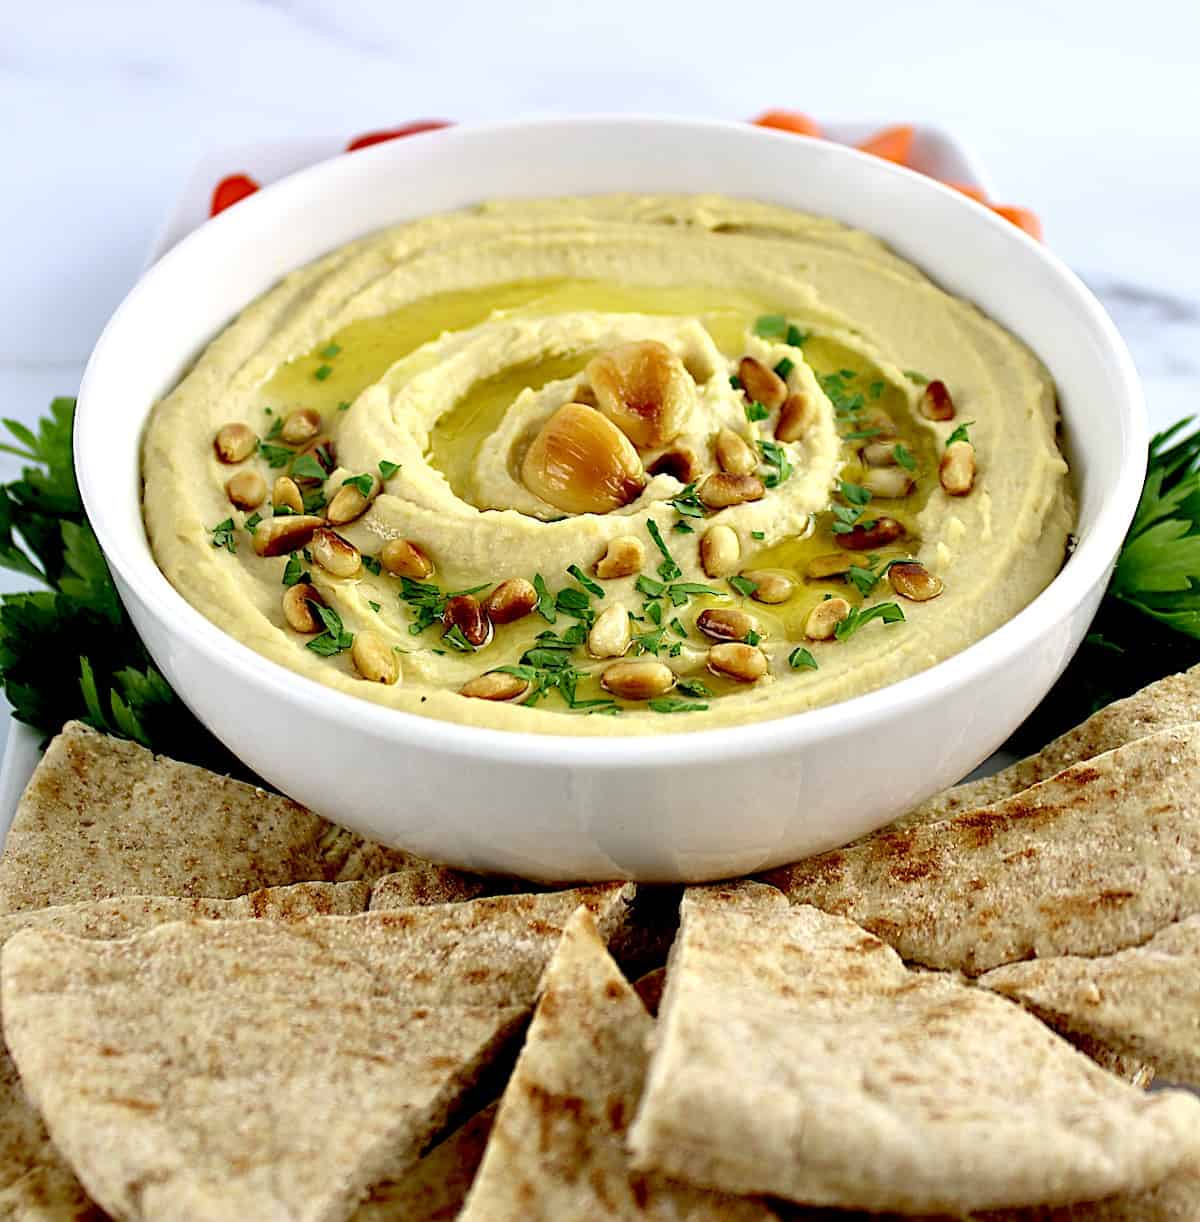 bowl of Roasted Garlic Hummus with pita wedges on side